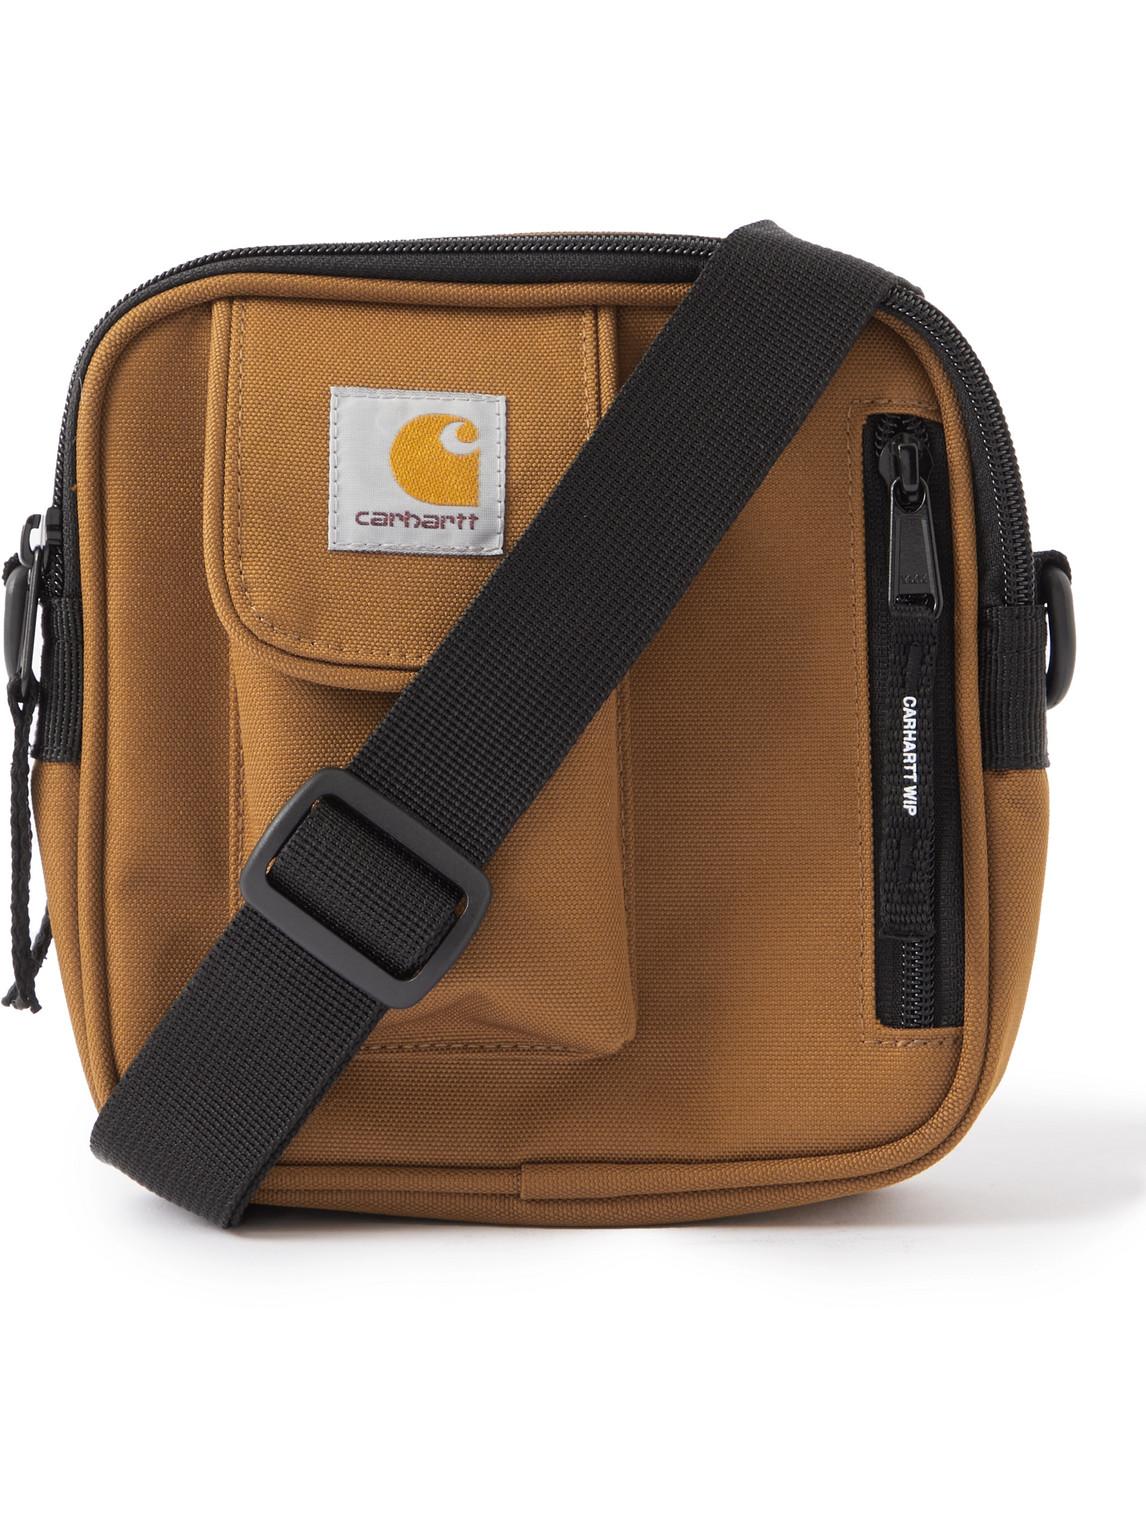 Carhartt WIP Canvas Camera Bag for Men